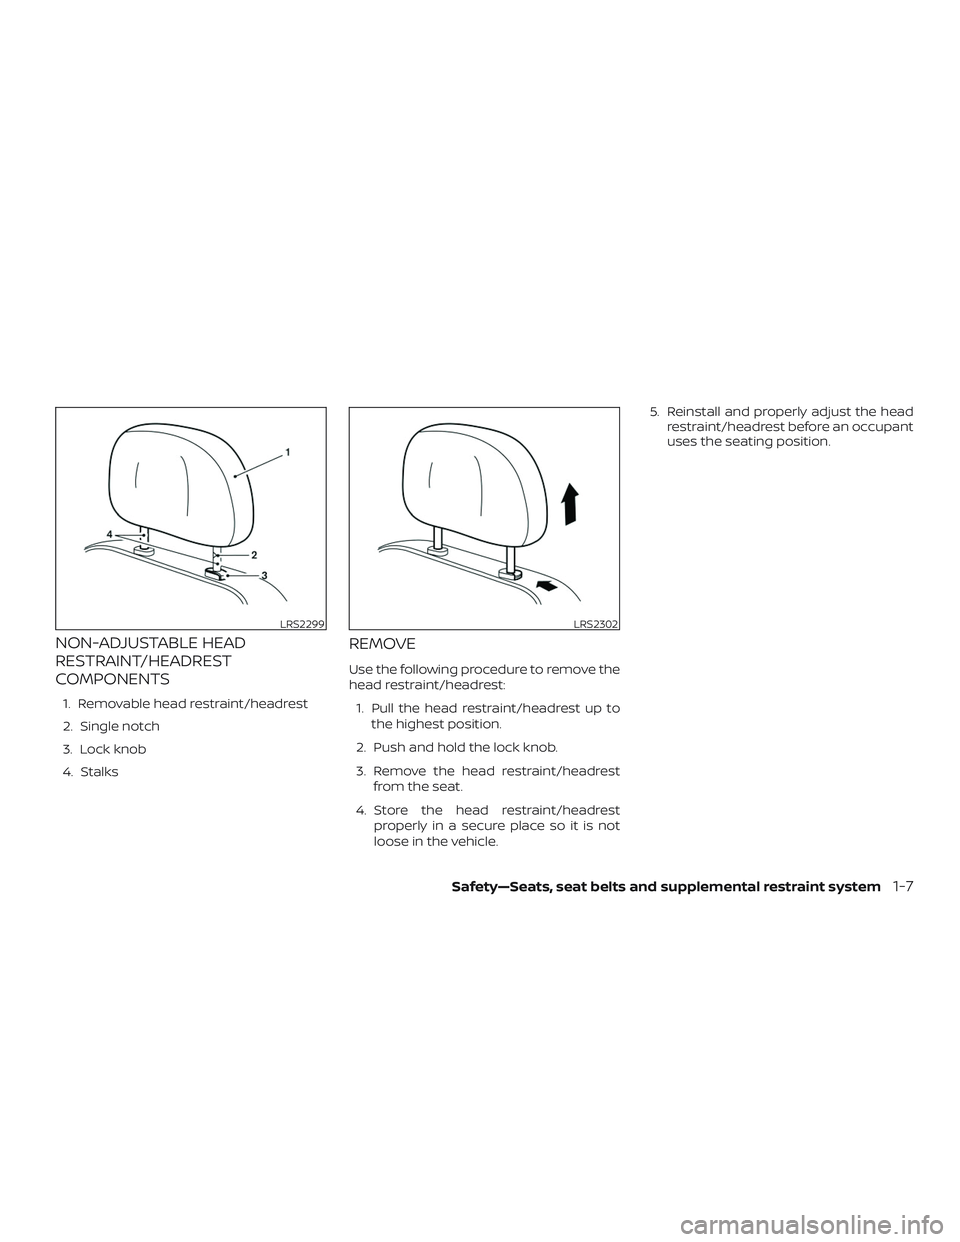 NISSAN VERSA SEDAN 2018  Owner´s Manual NON-ADJUSTABLE HEAD
RESTRAINT/HEADREST
COMPONENTS
1. Removable head restraint/headrest
2. Single notch
3. Lock knob
4. Stalks
REMOVE
Use the following procedure to remove the
head restraint/headrest:
